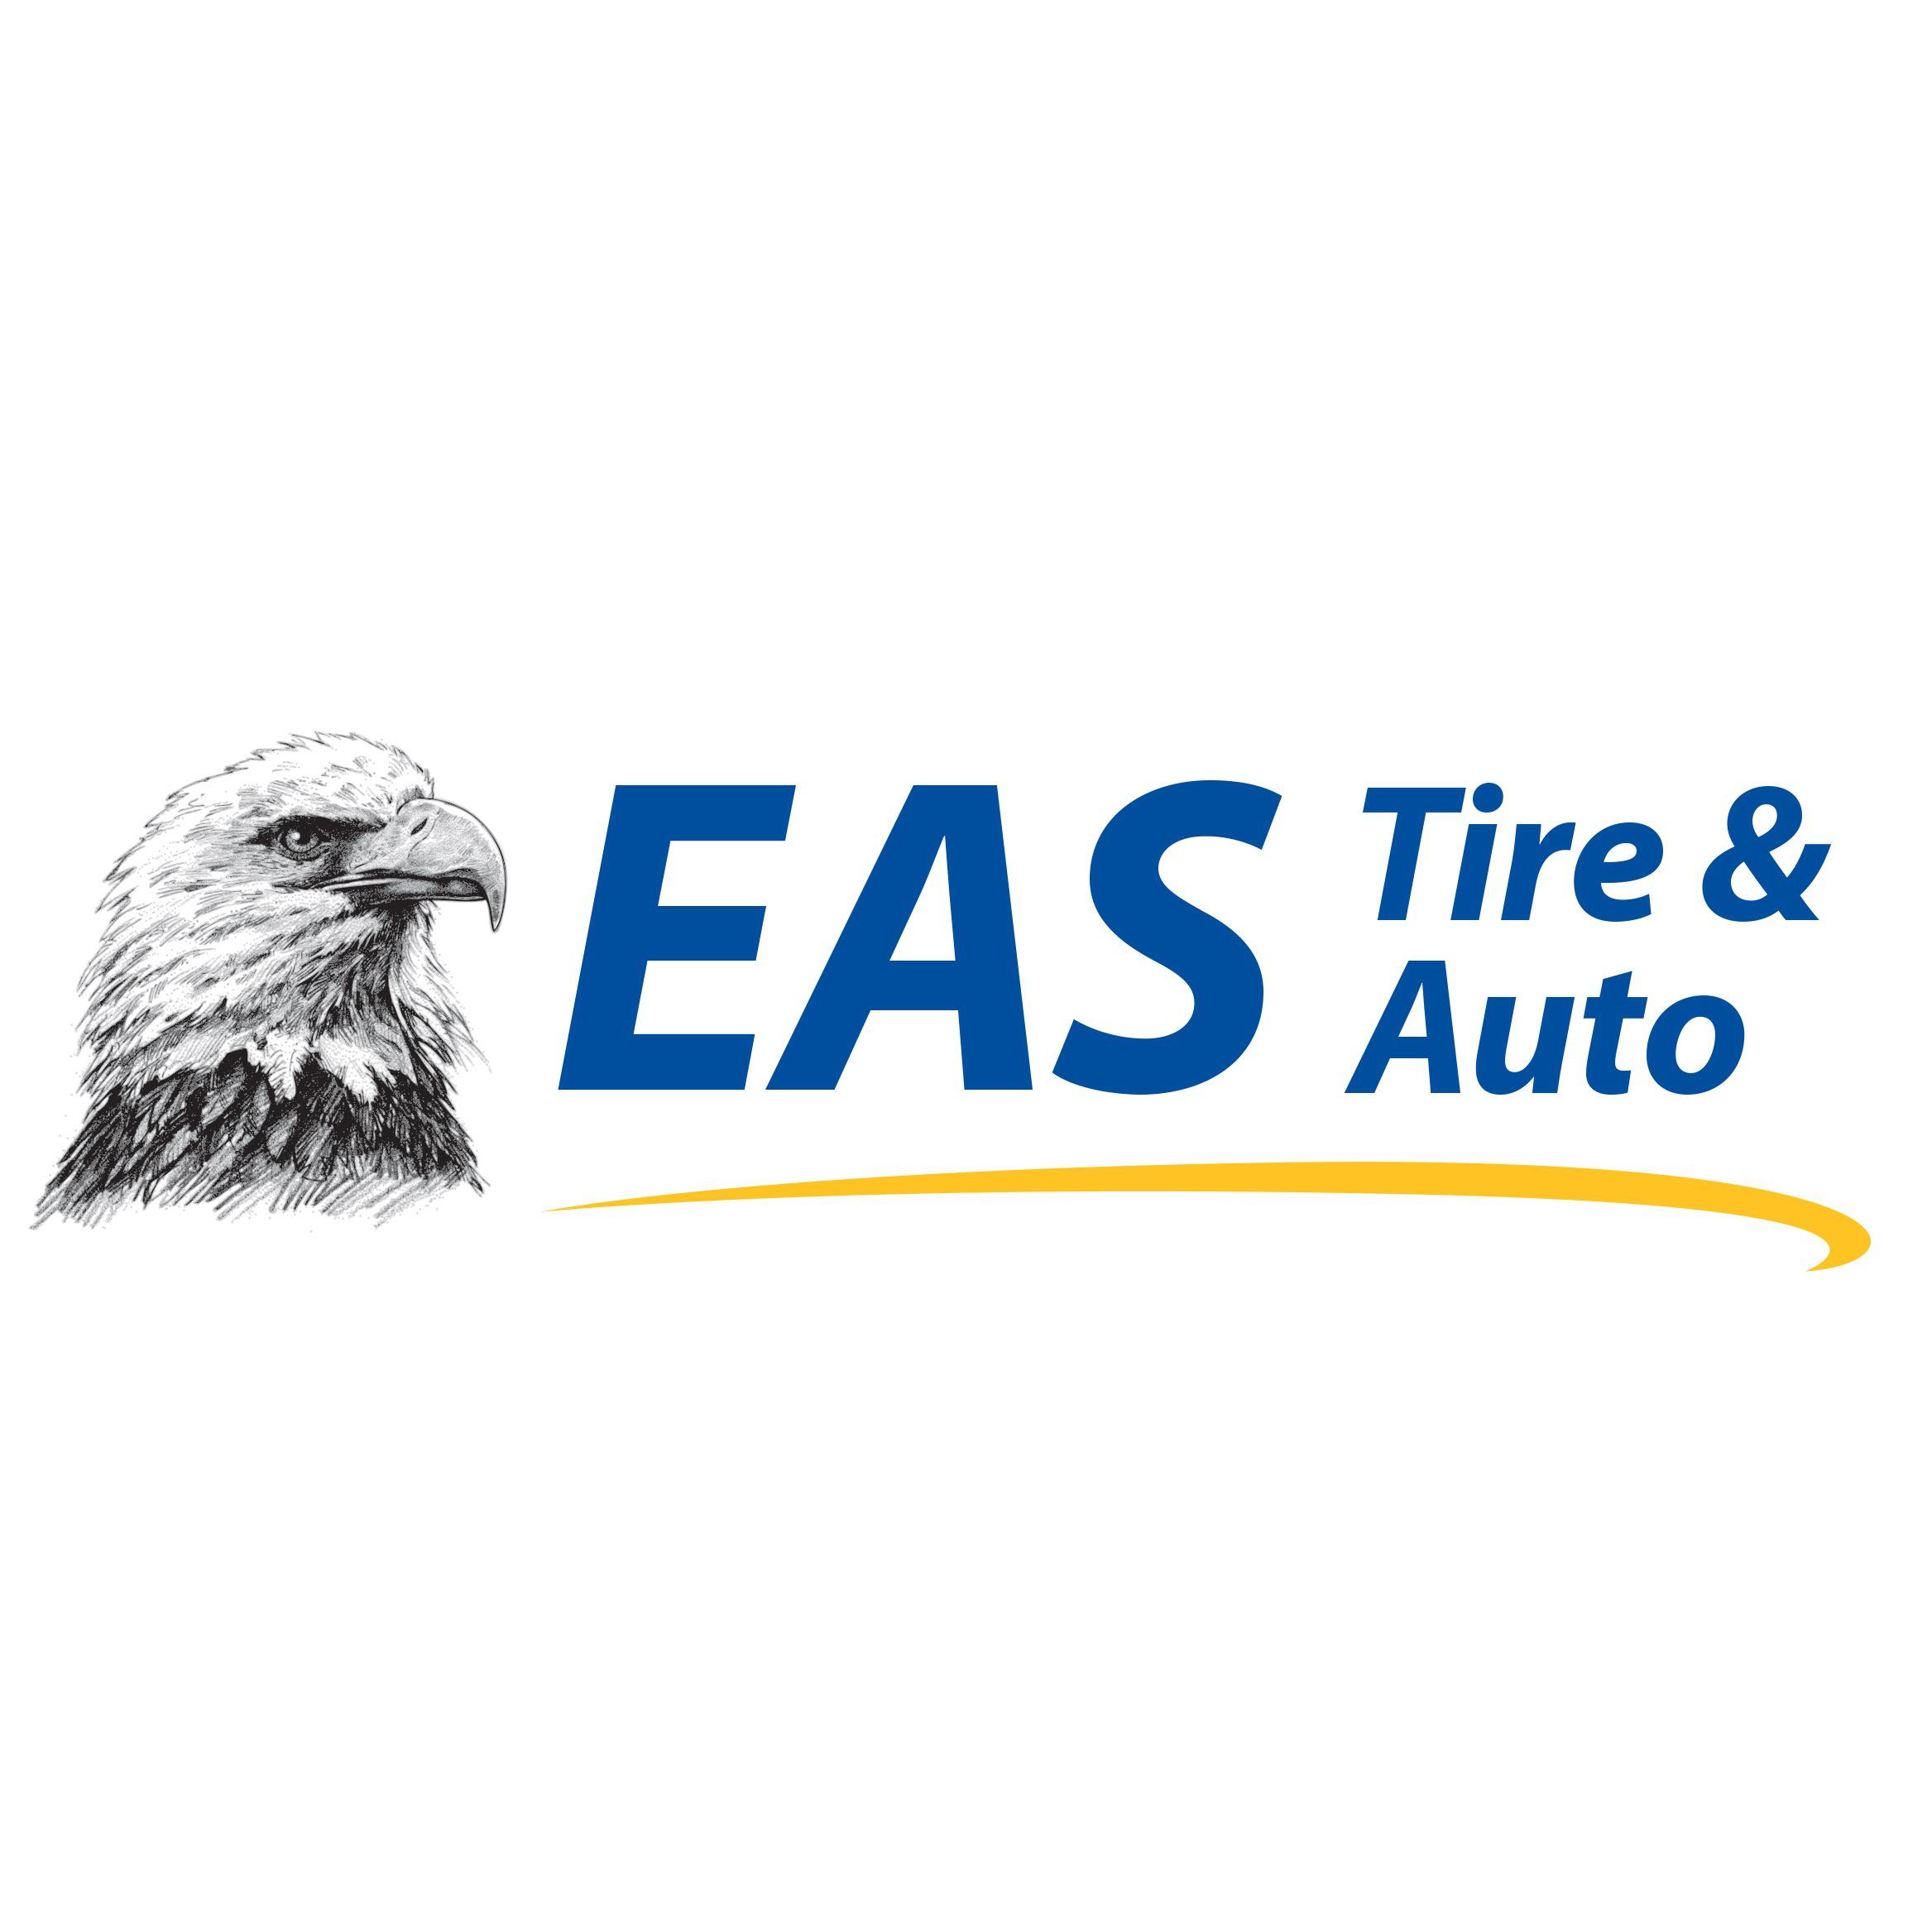 EAS Tire & Auto - Littleton, CO 80123 - (303)948-4410 | ShowMeLocal.com